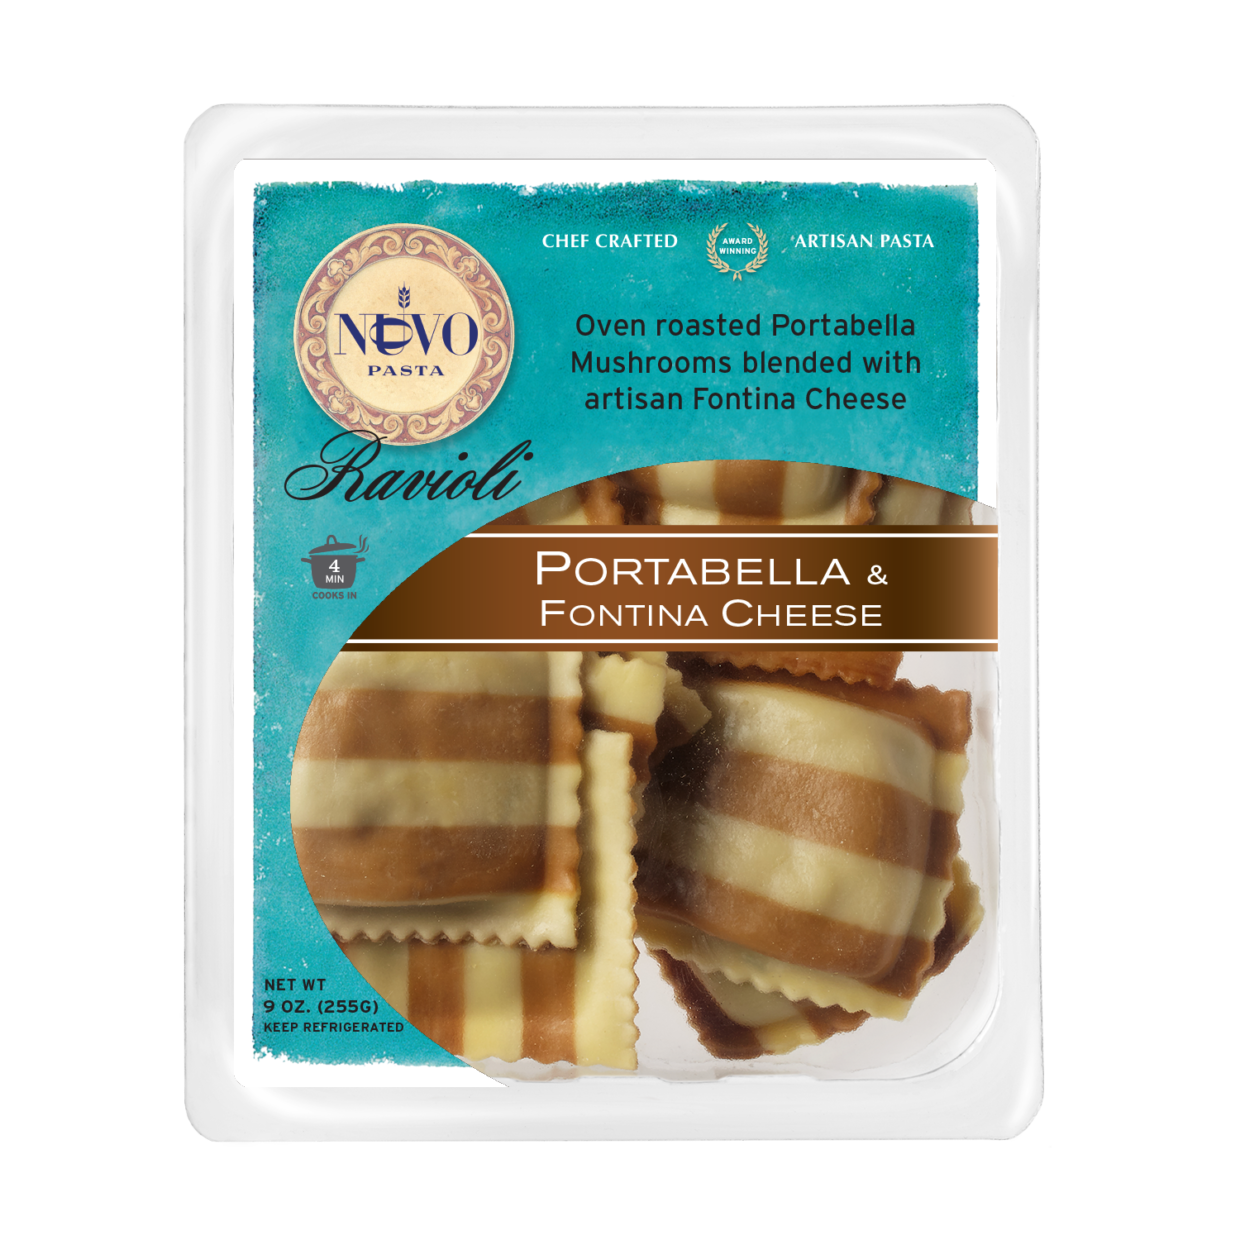 Portabella & Fontina Cheese